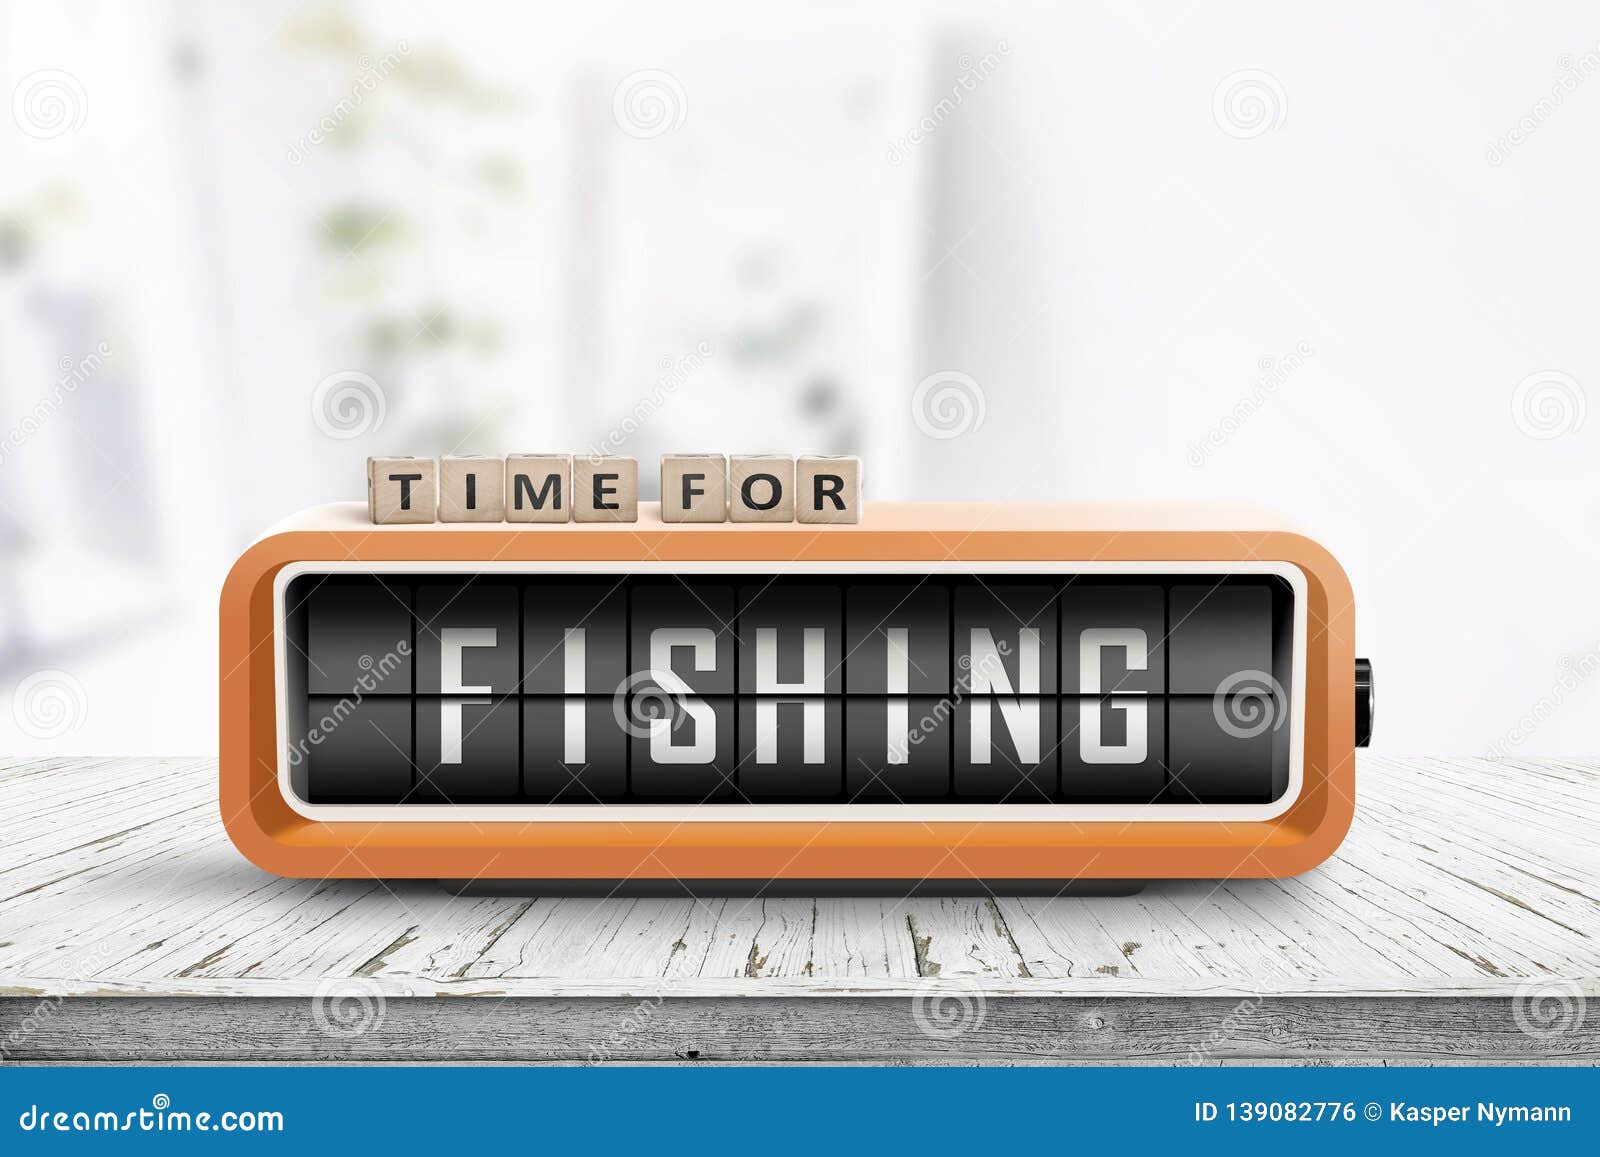 Retro Alarm Clock with the Word Fishing Stock Photo - Image of